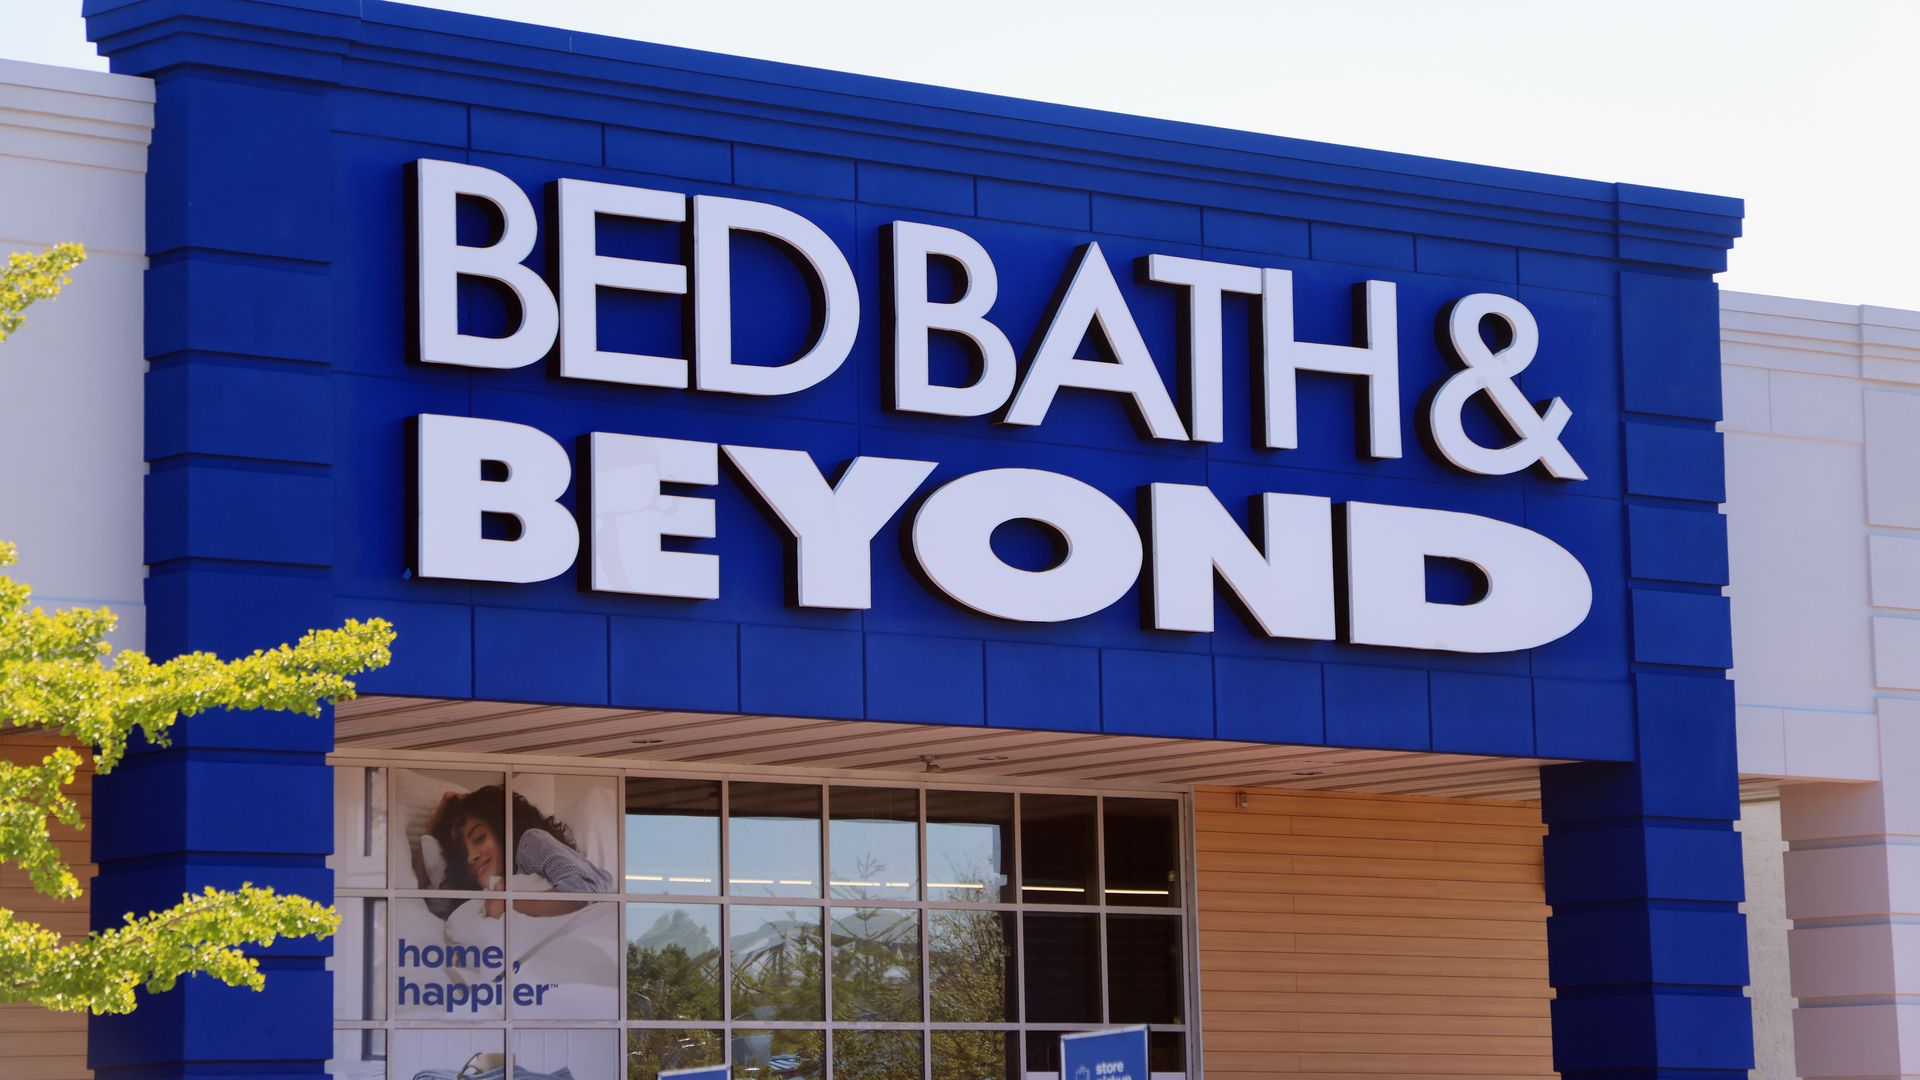 Image of Bed Bath & Beyond storefront